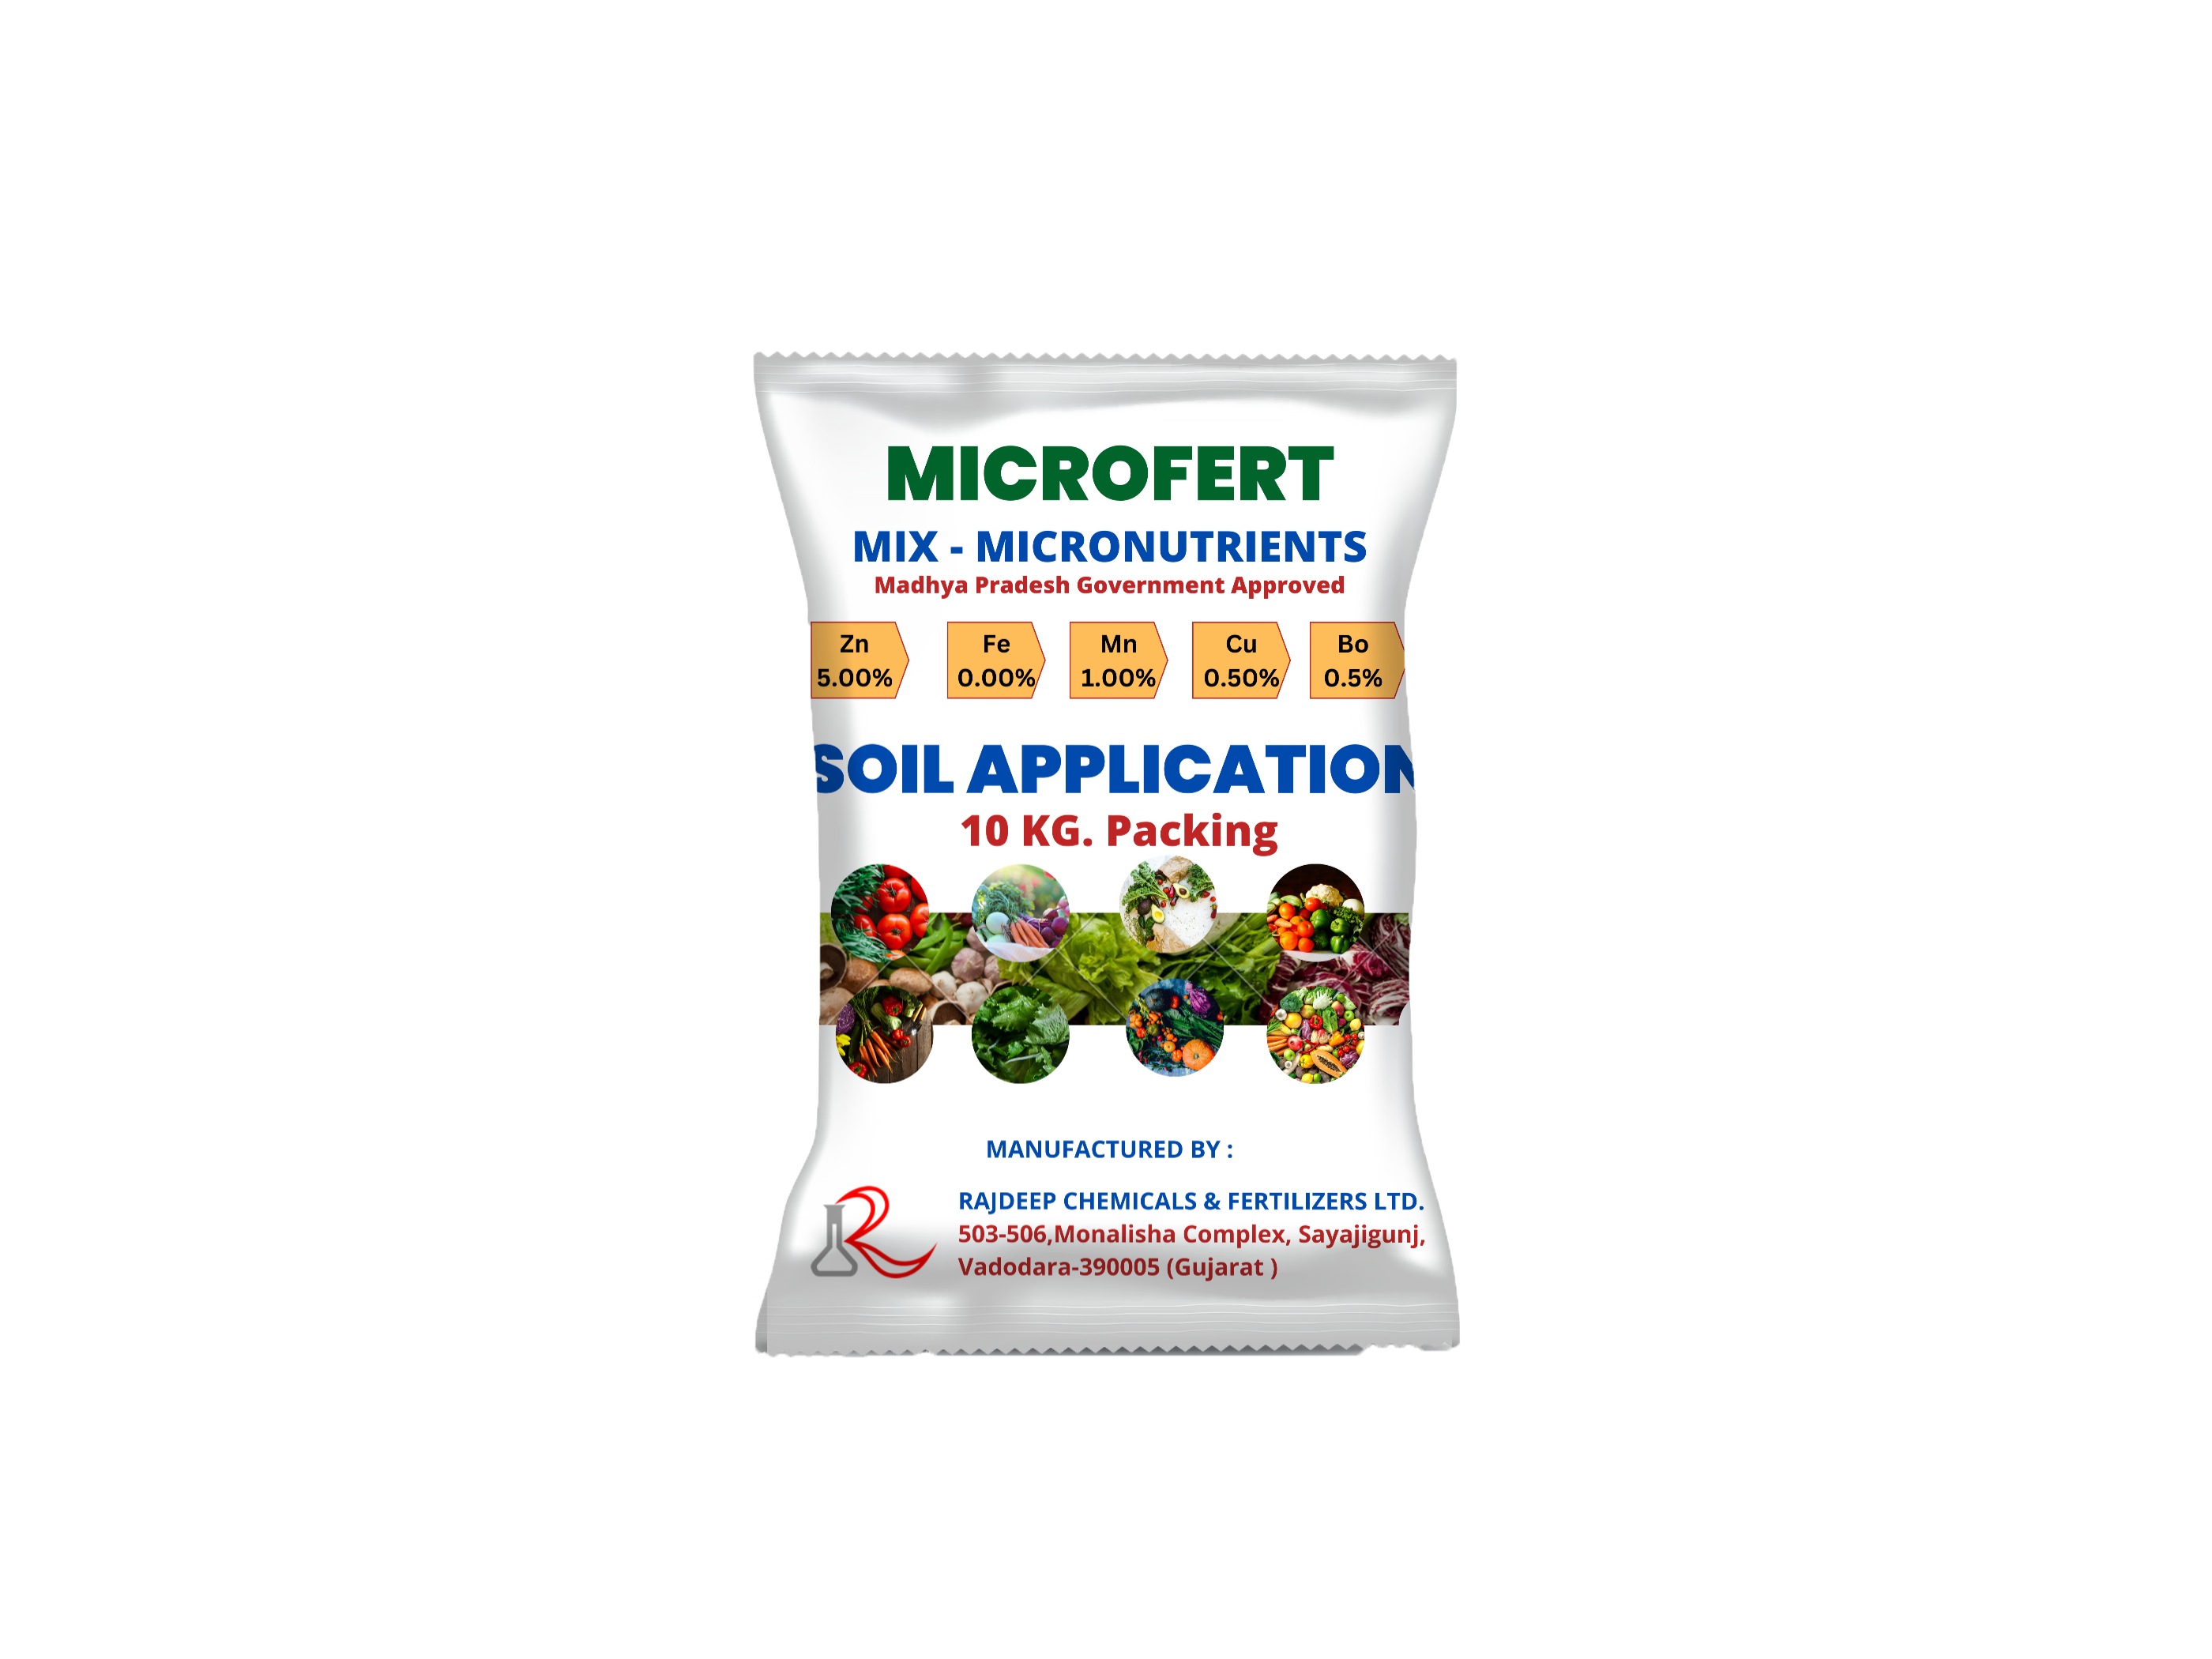 Microfert Mix nutrient